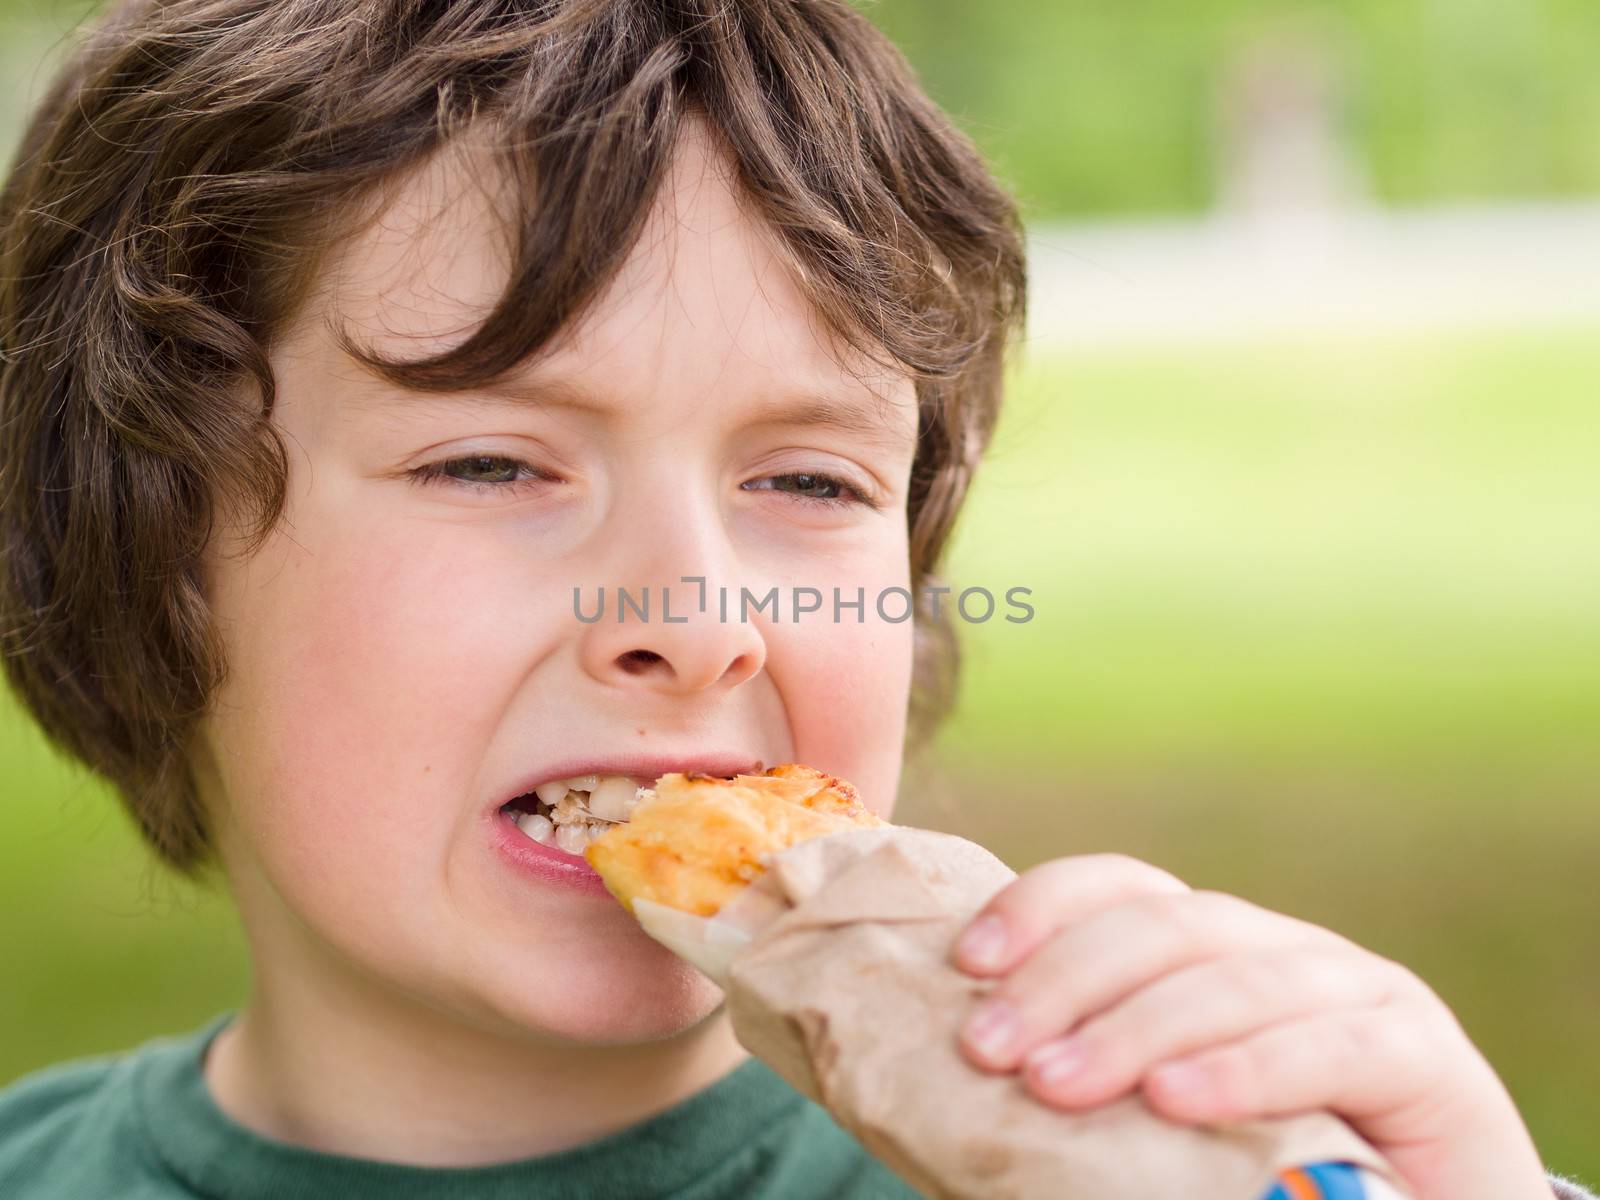 Boy eating freshly baked bread rolls